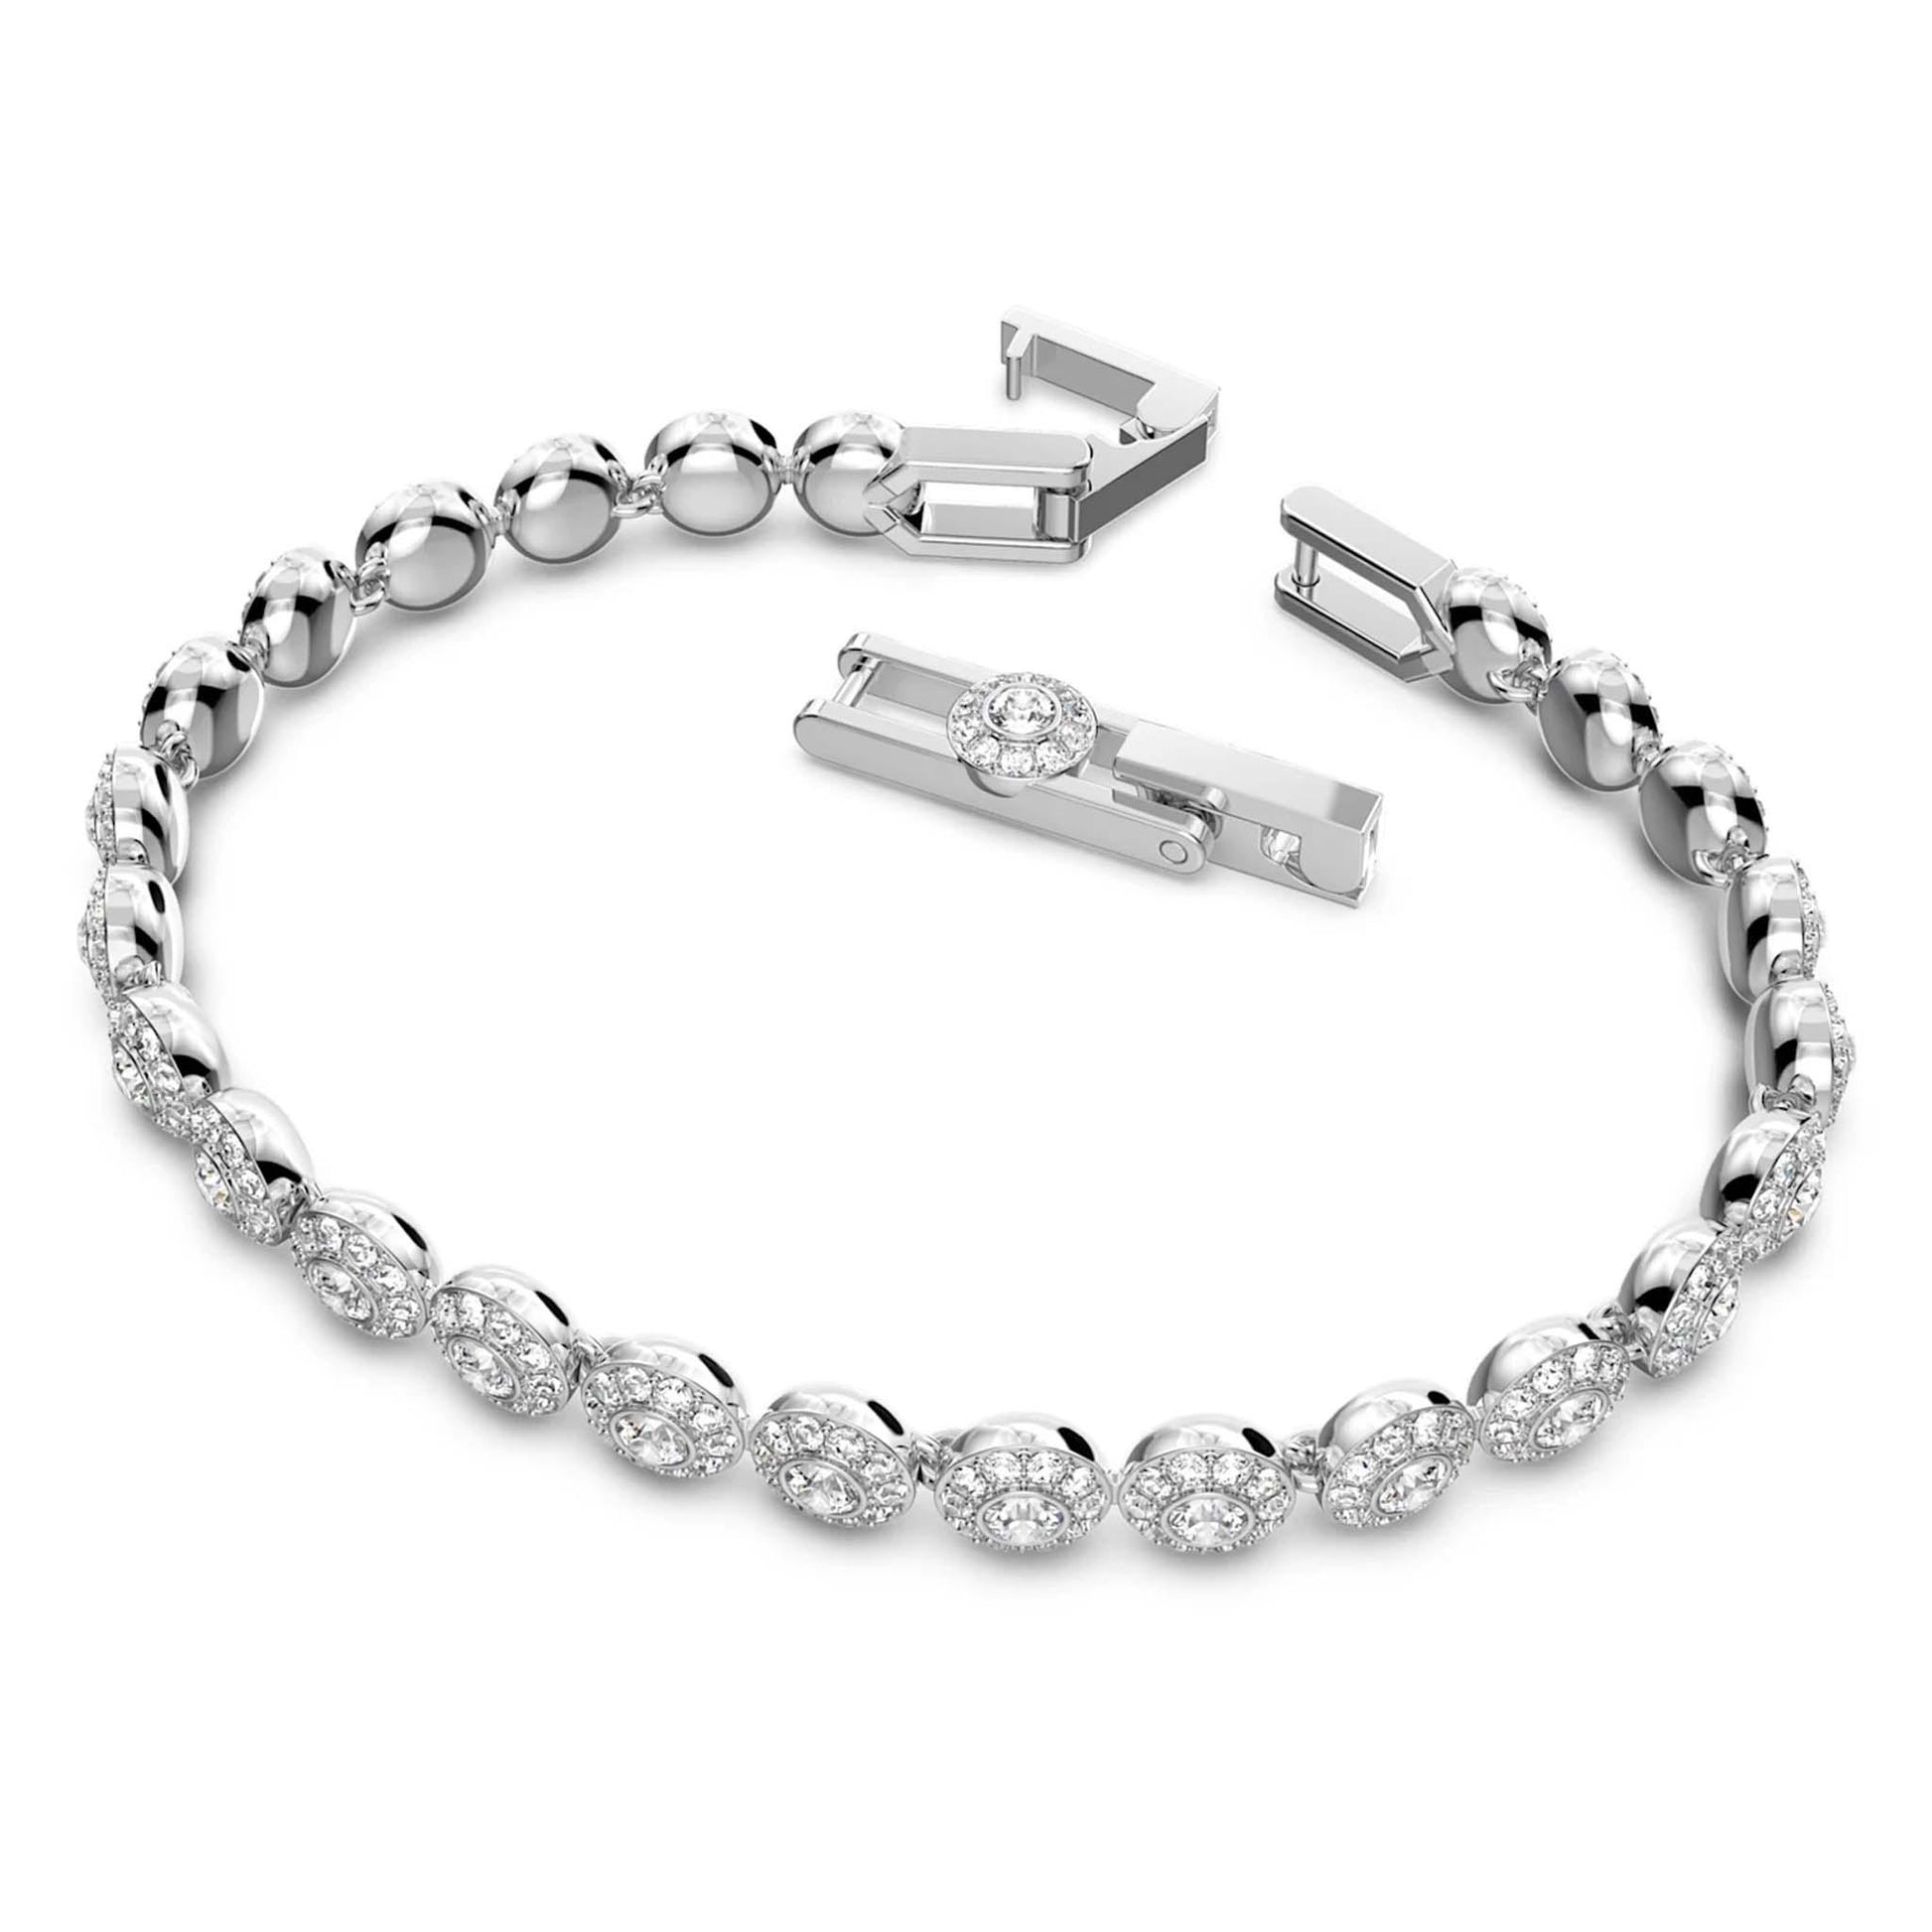 Angelic bracelet - Cosmos Boutique New Jersey